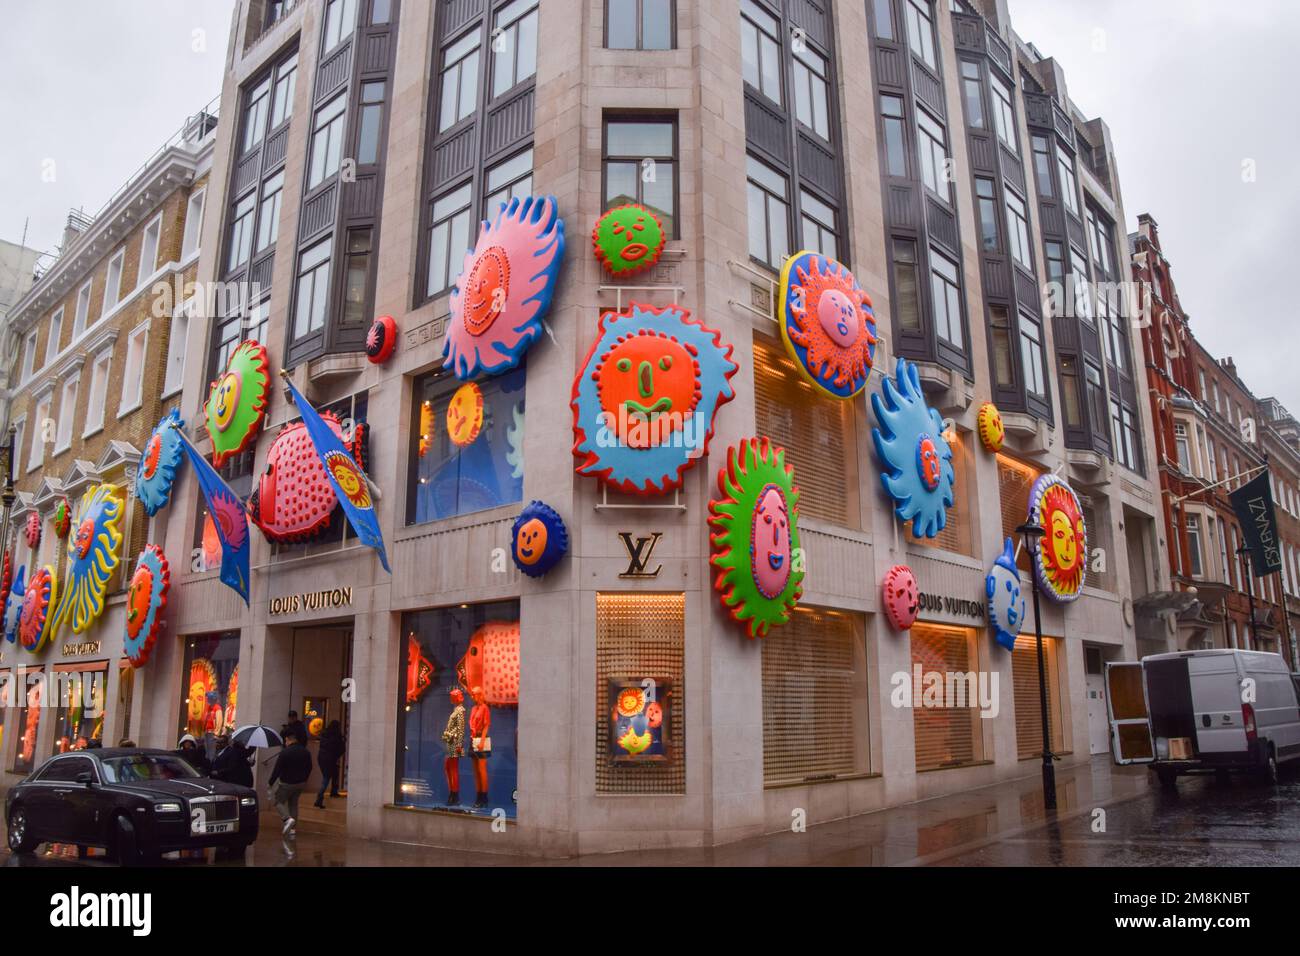 Louis vuitton coloured heart shape shop window display. Sloane Street,  Belgravia, London, England Stock Photo - Alamy